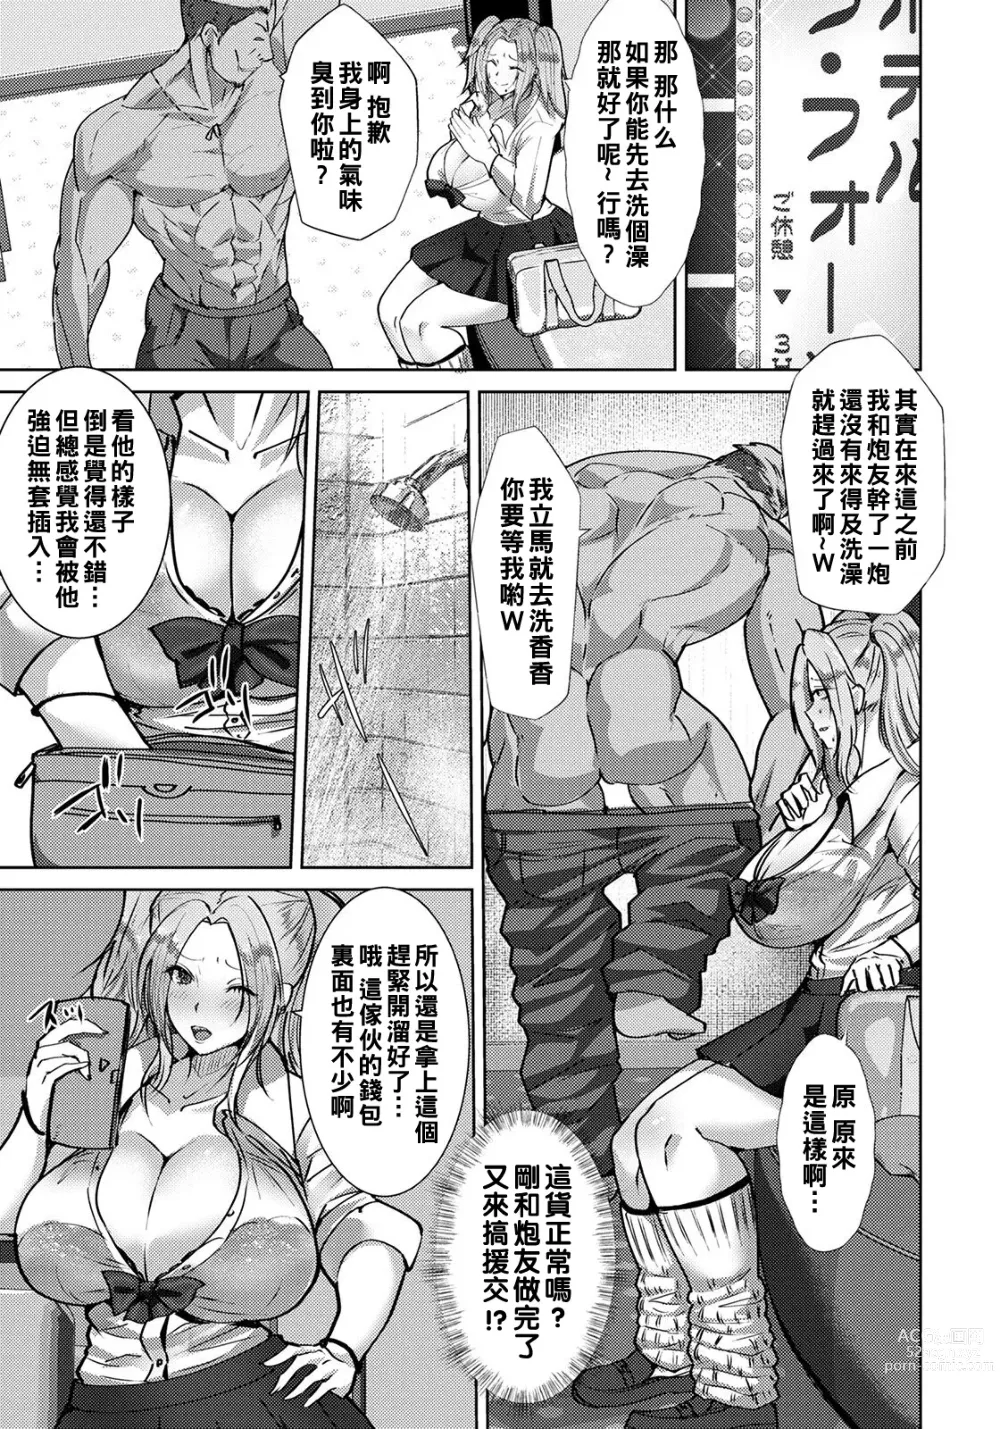 Page 5 of manga Amai Wana no Daishou